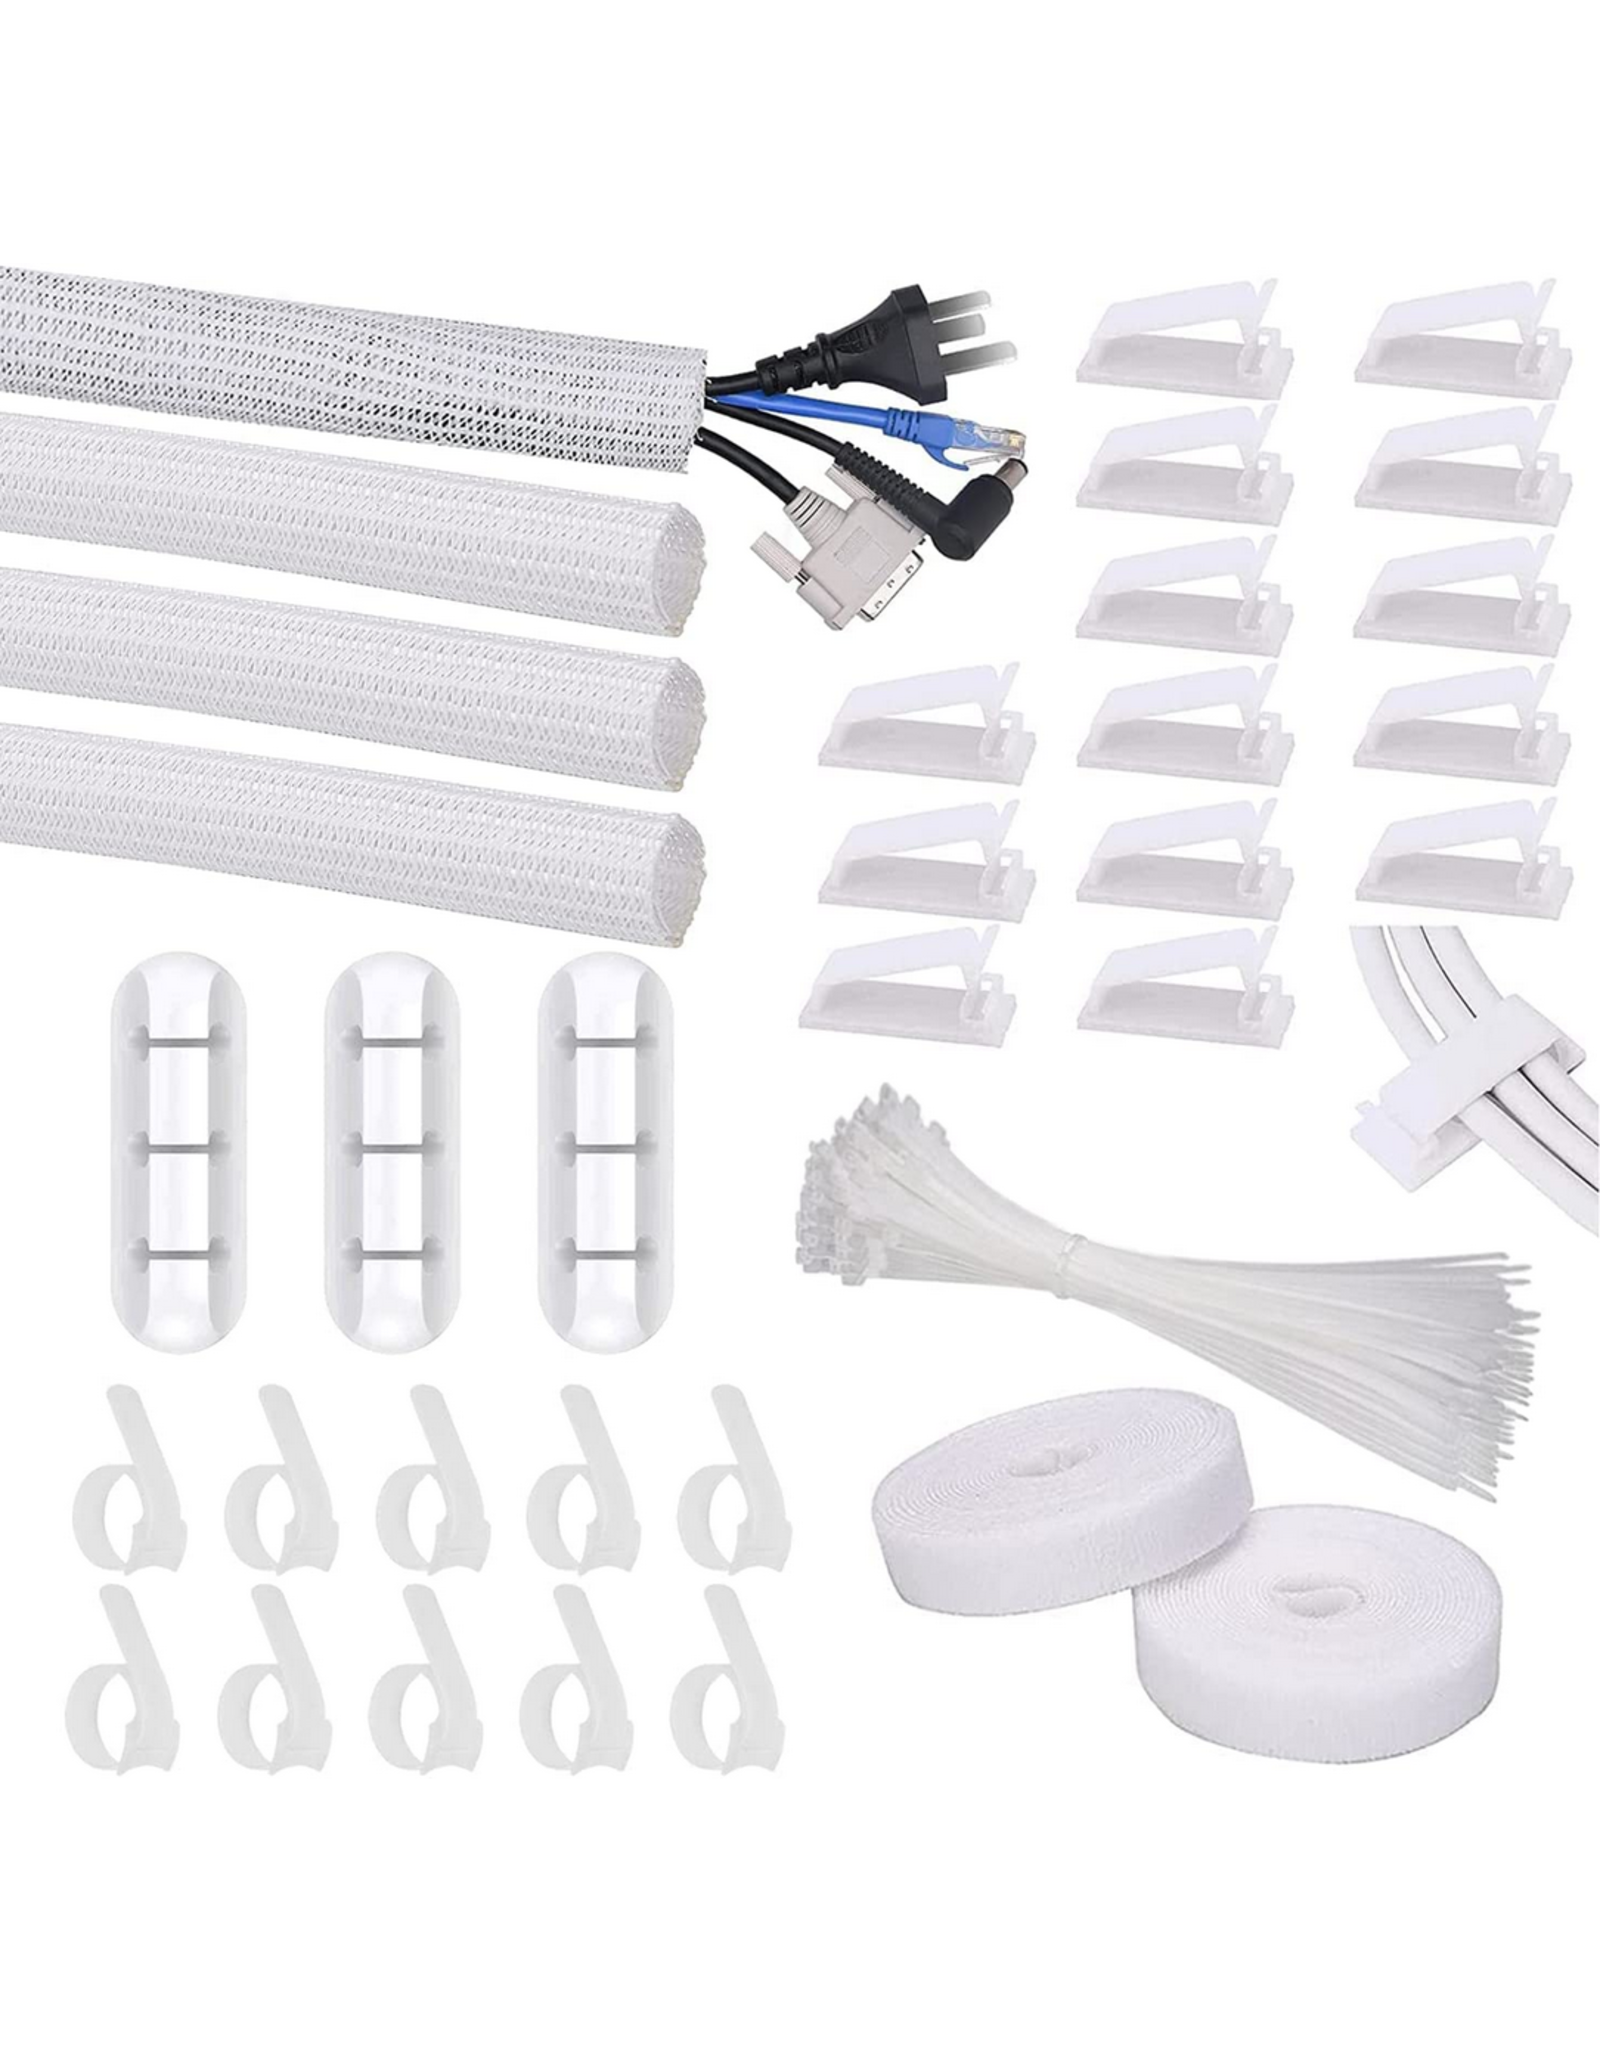 Cable Management Kit, 134 Pieces, White